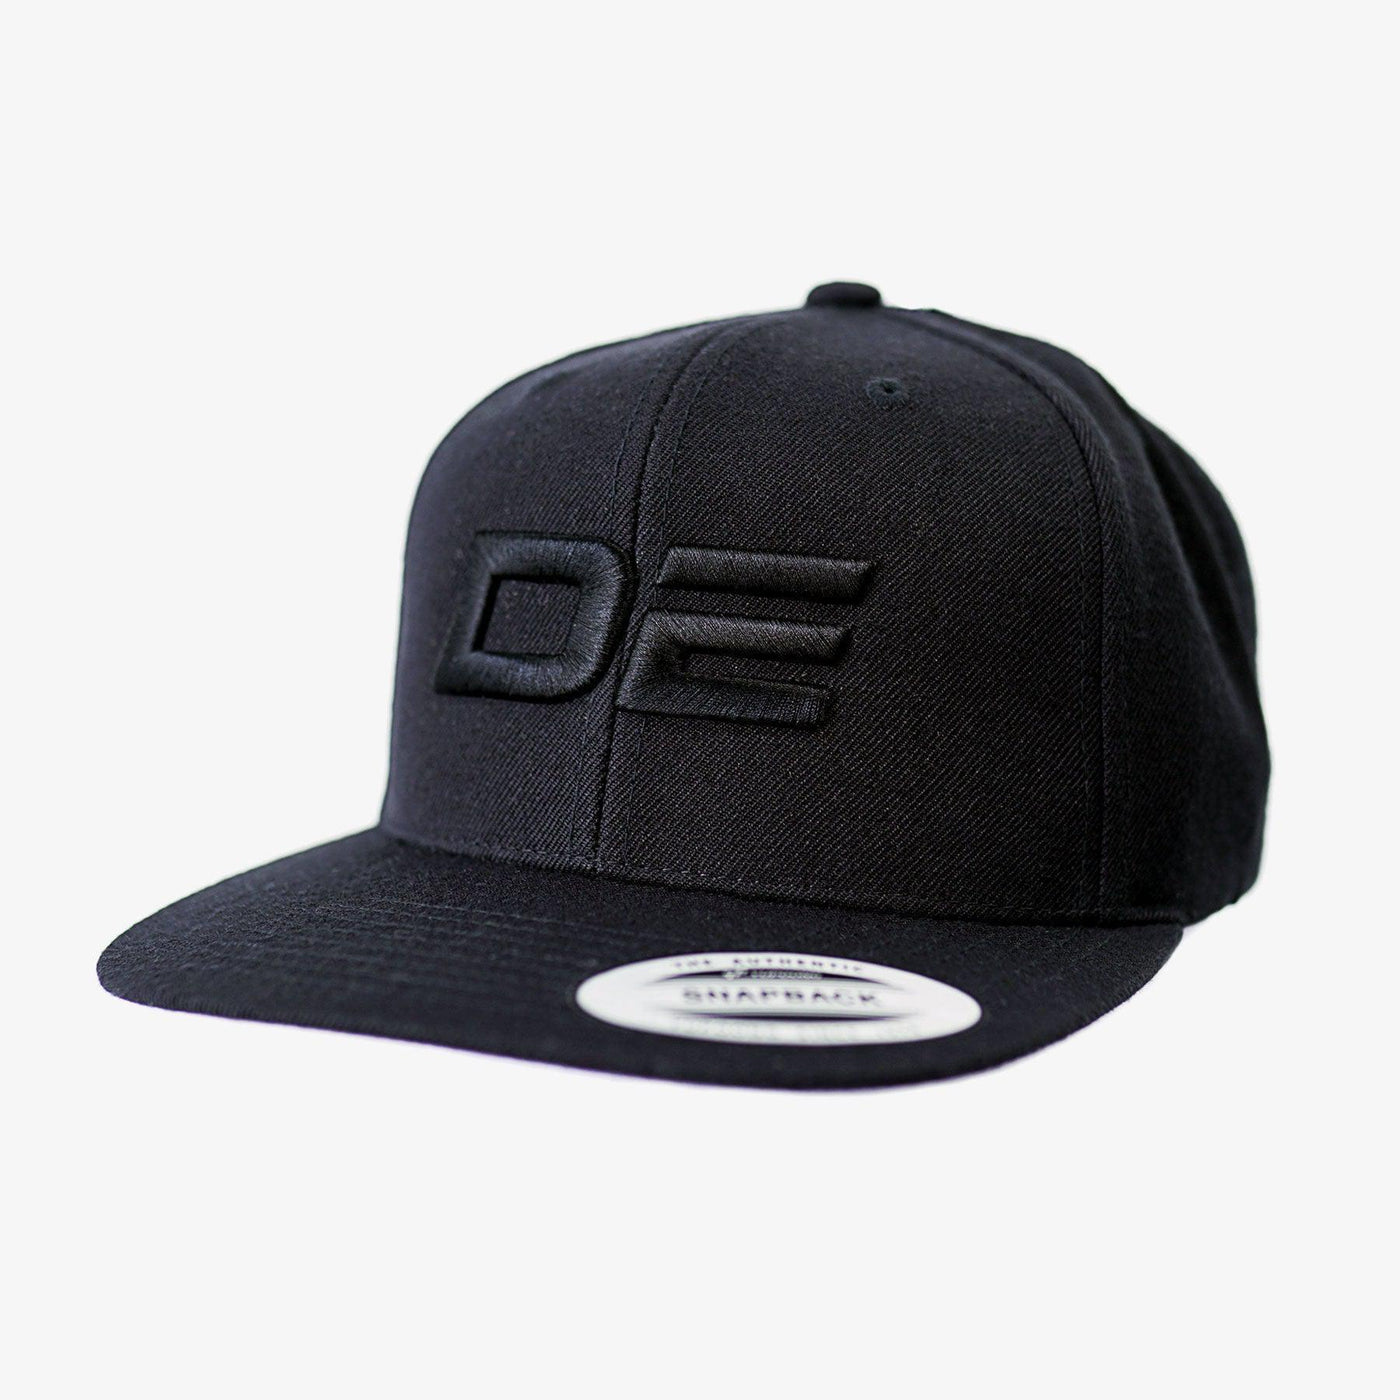 DE Logo - Snapback Black/Black Flat Peak Cap